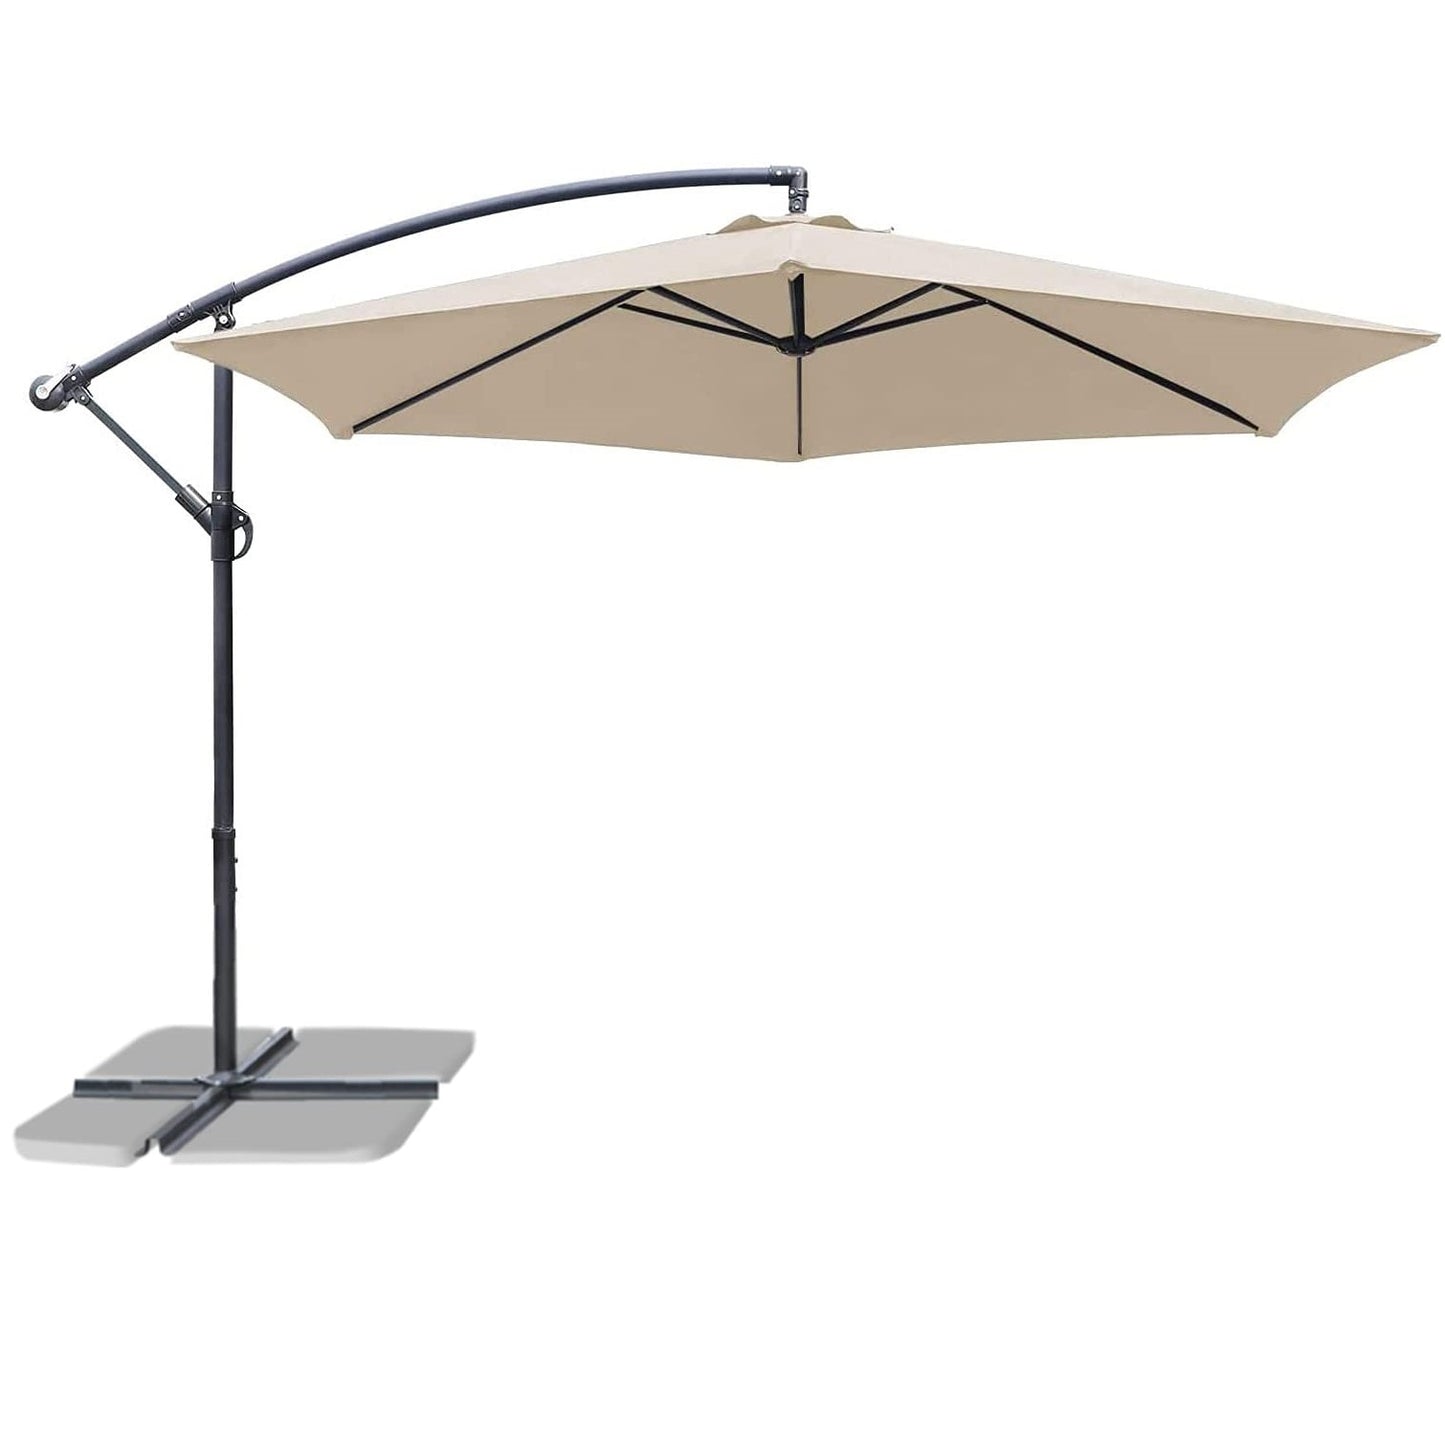 Offset Umbrella 10FT Cantilever Patio Hanging Umbrella Outdoor Market Umbrella with Crank and Cross Base Outdoor Parasol